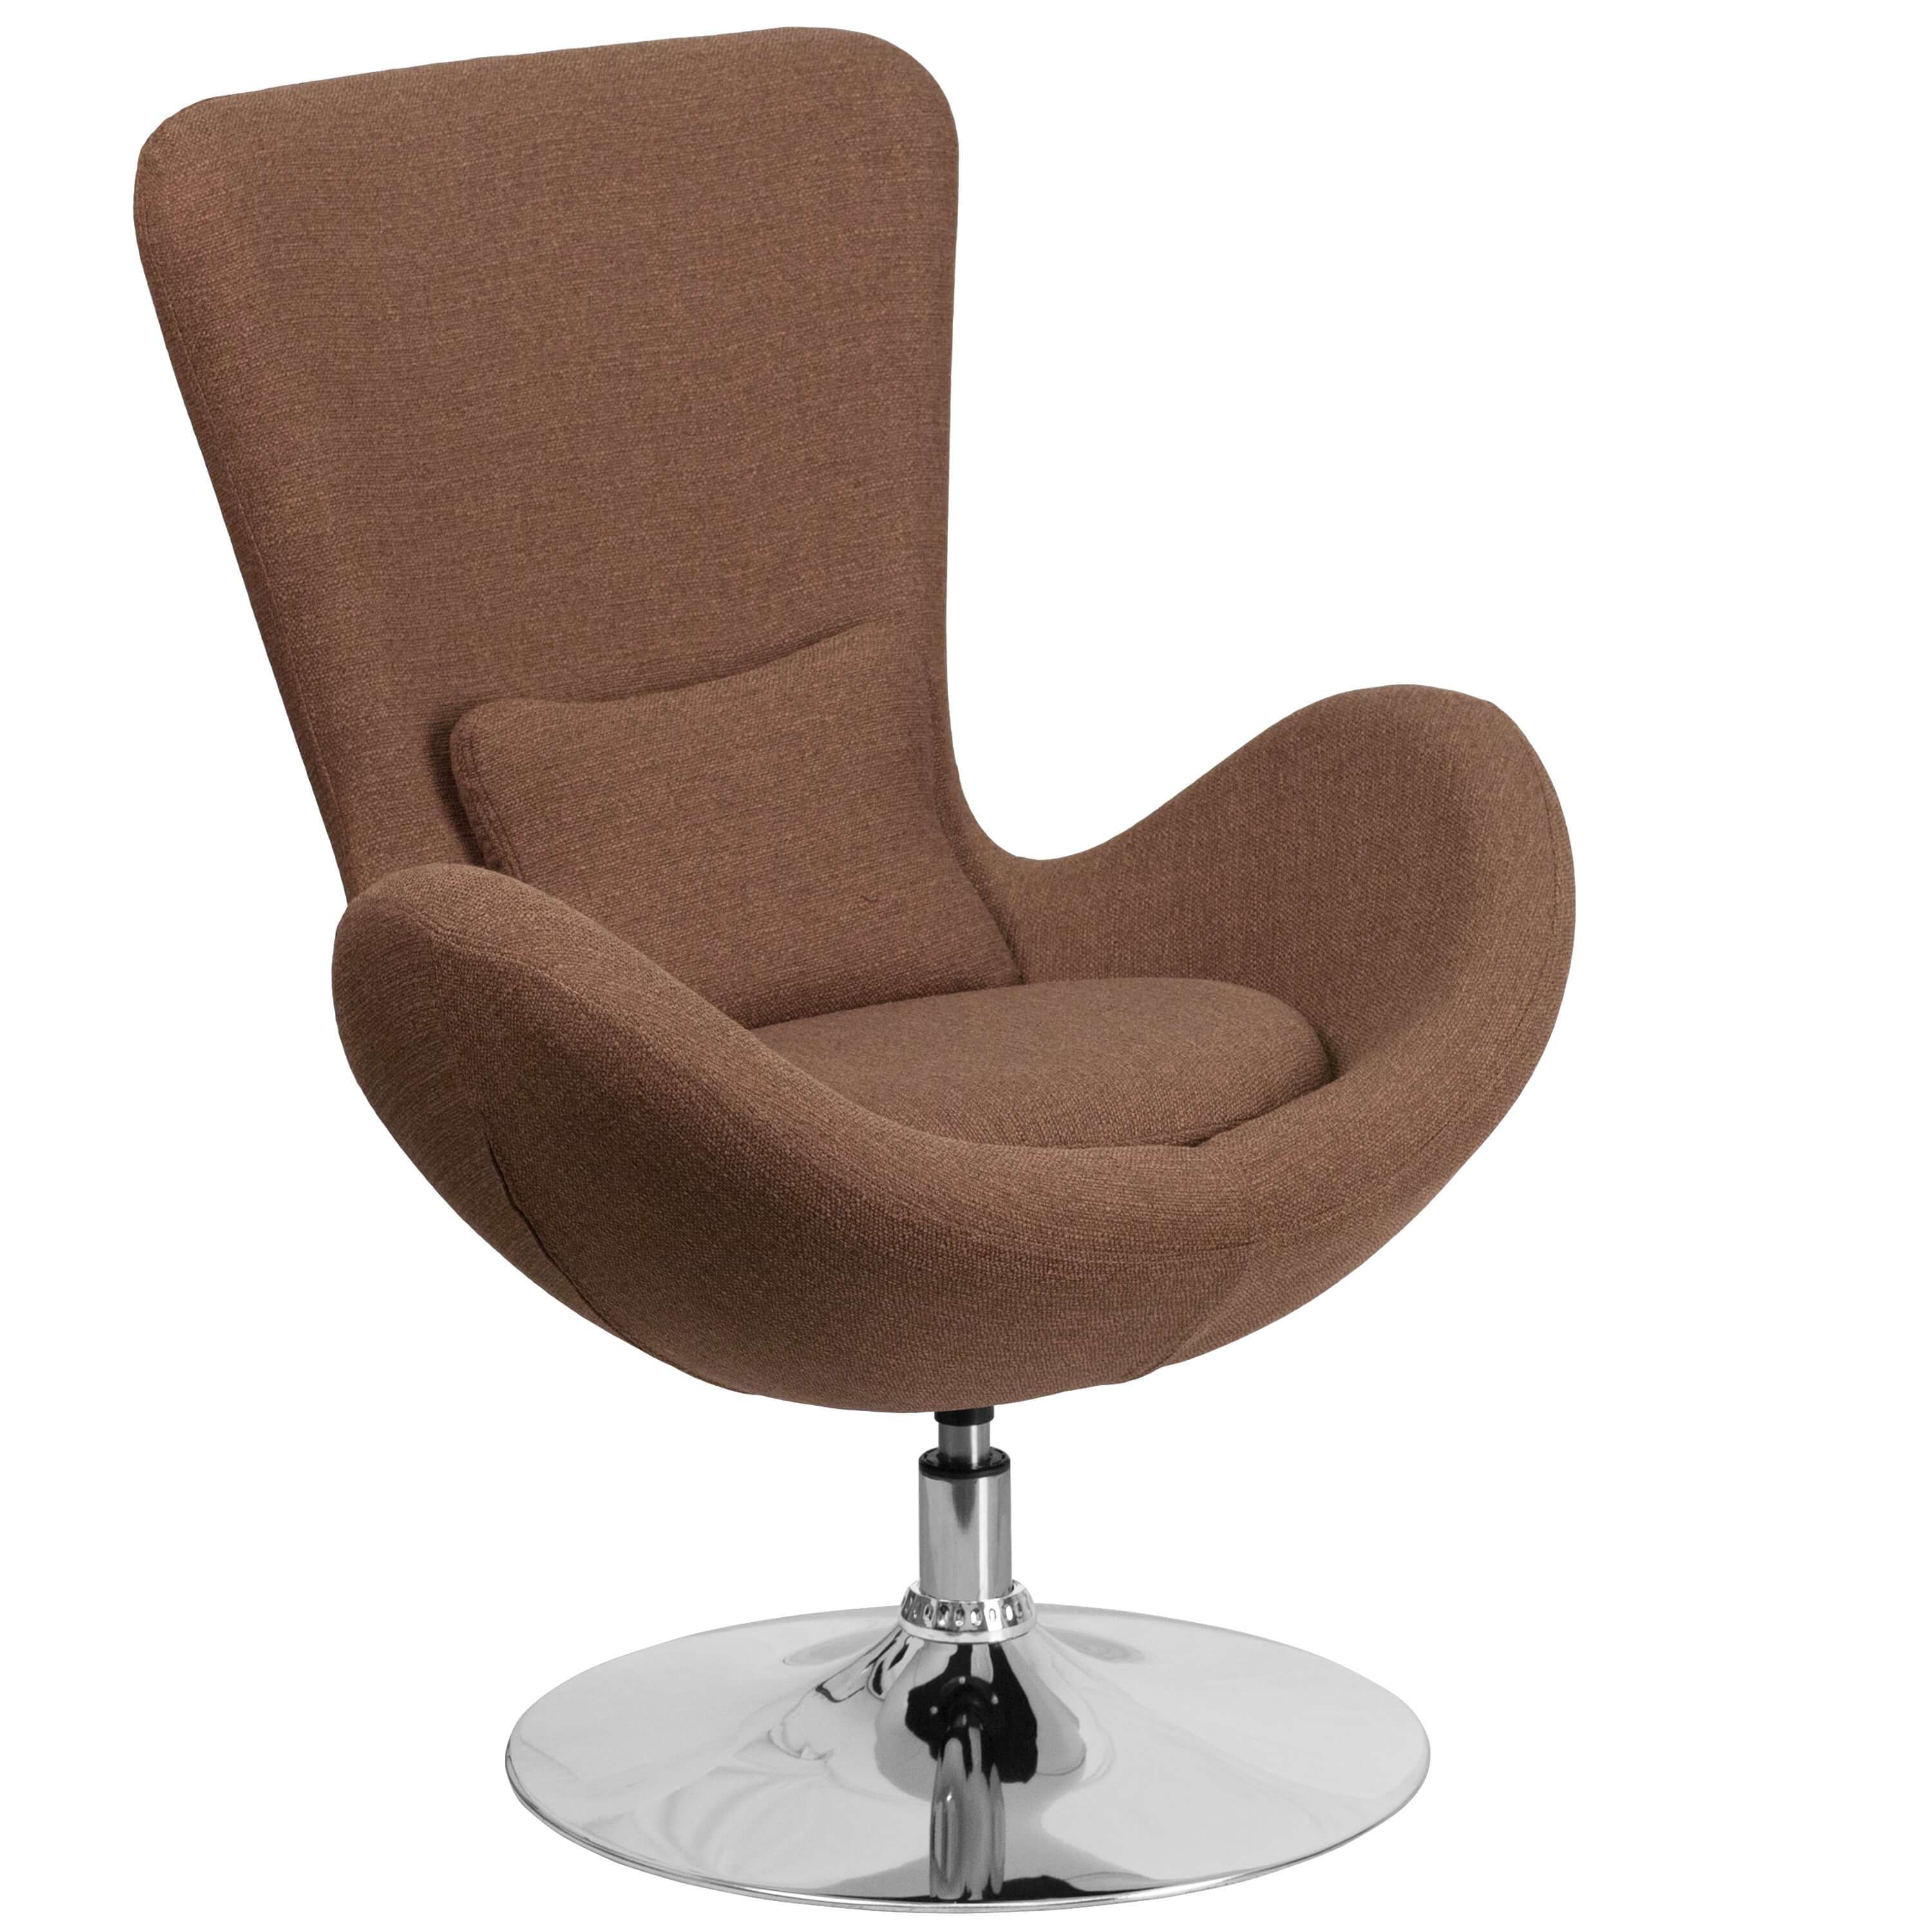 Office lounge chairs CUB CH 162430 BN FAB GG FLA